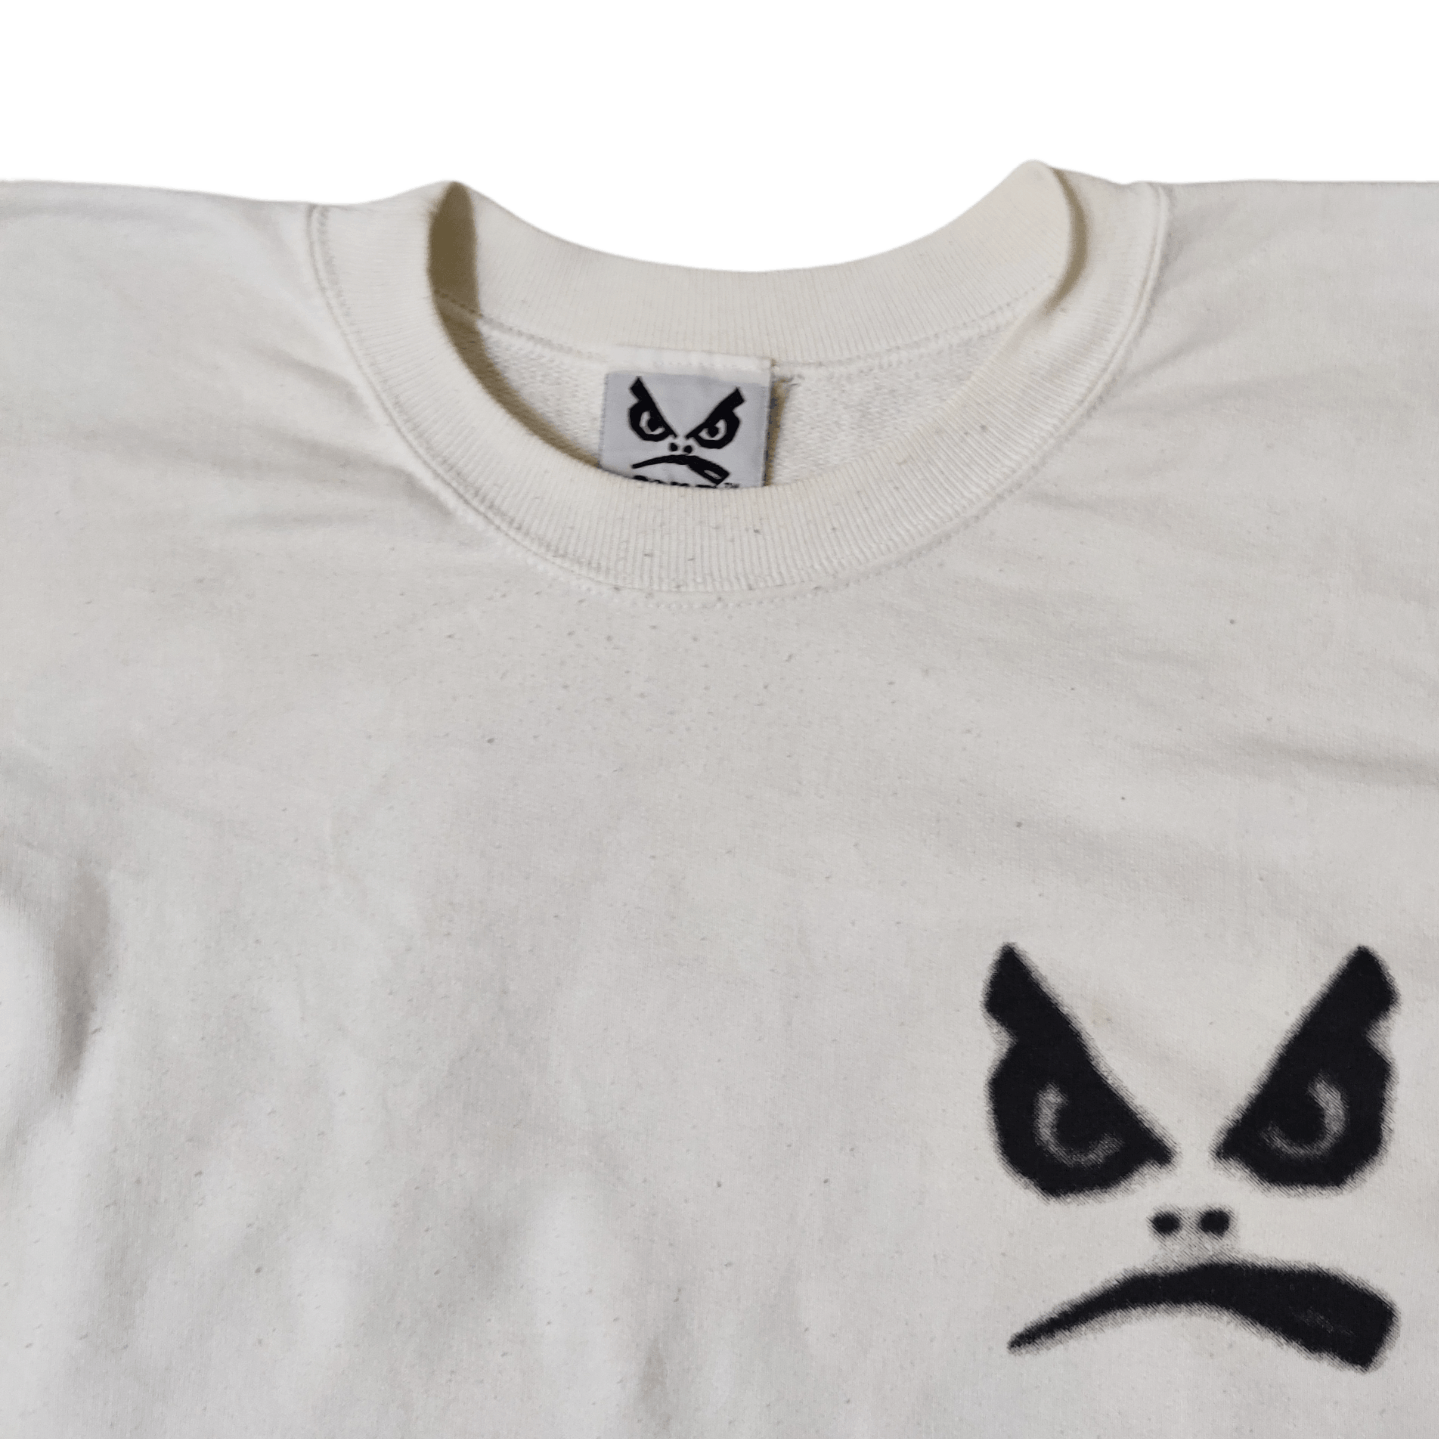 Vintage Bad Boy Crewneck Sweatshirt Big Angry Face - 4